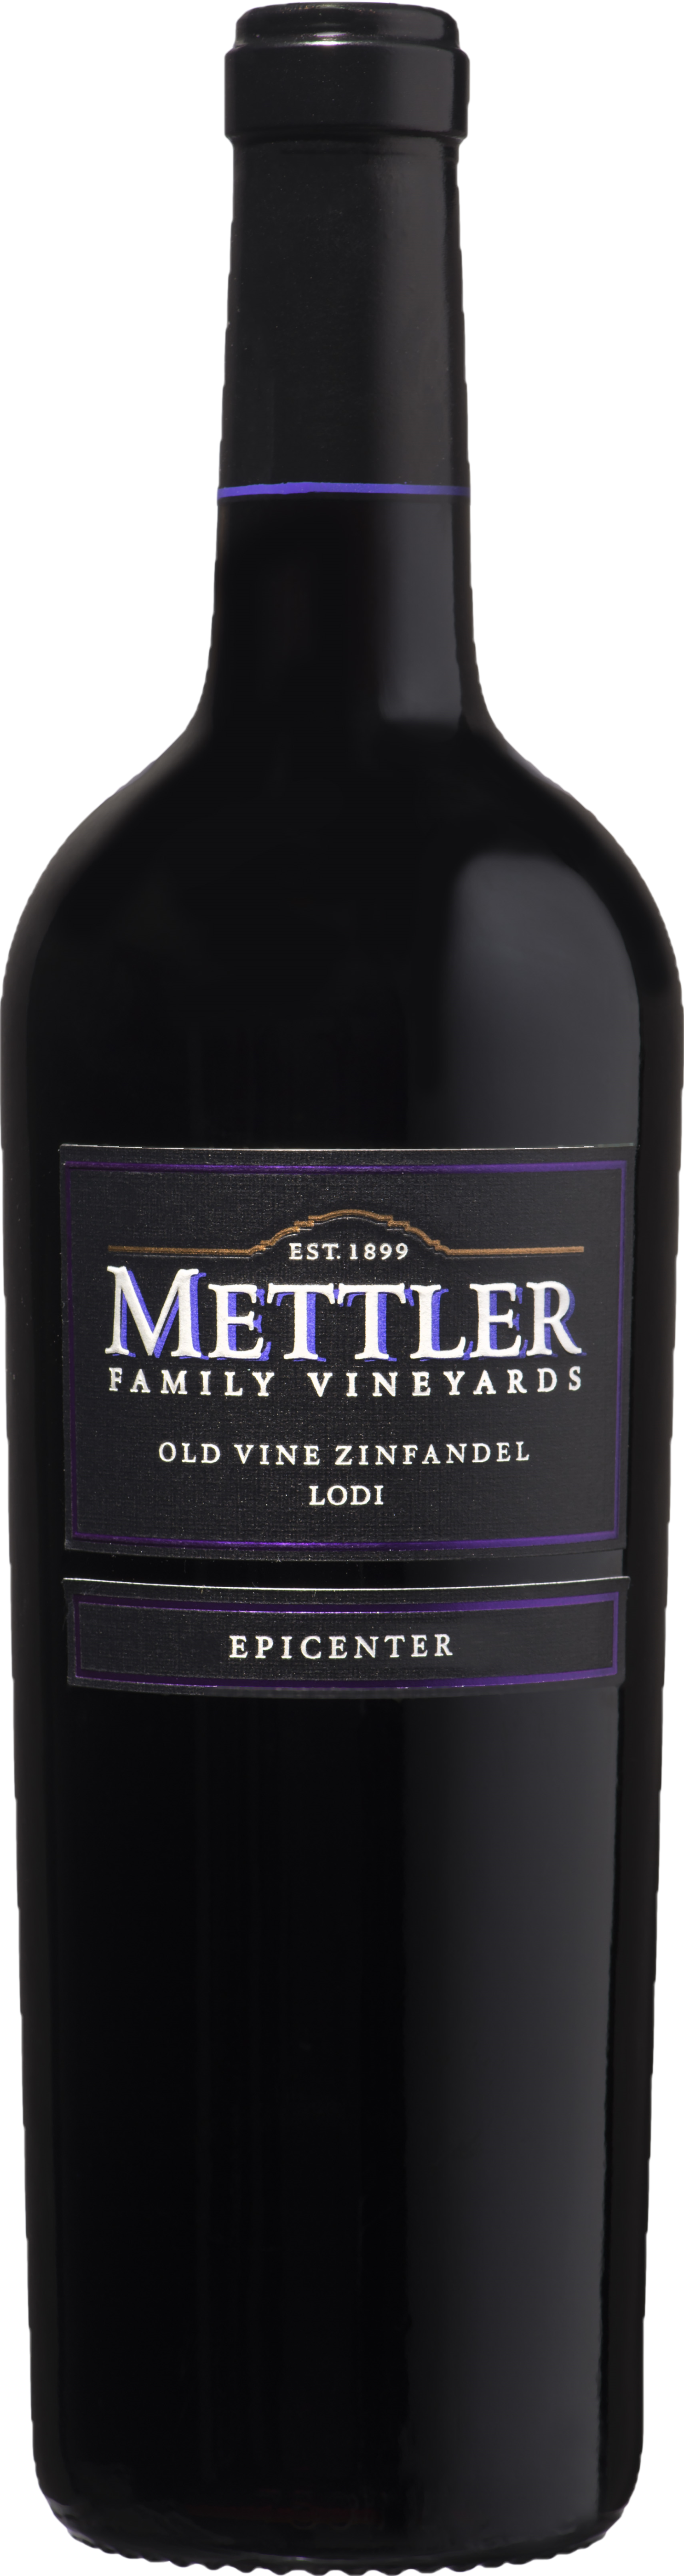 Mettler Old Vine Zinfandel 2019